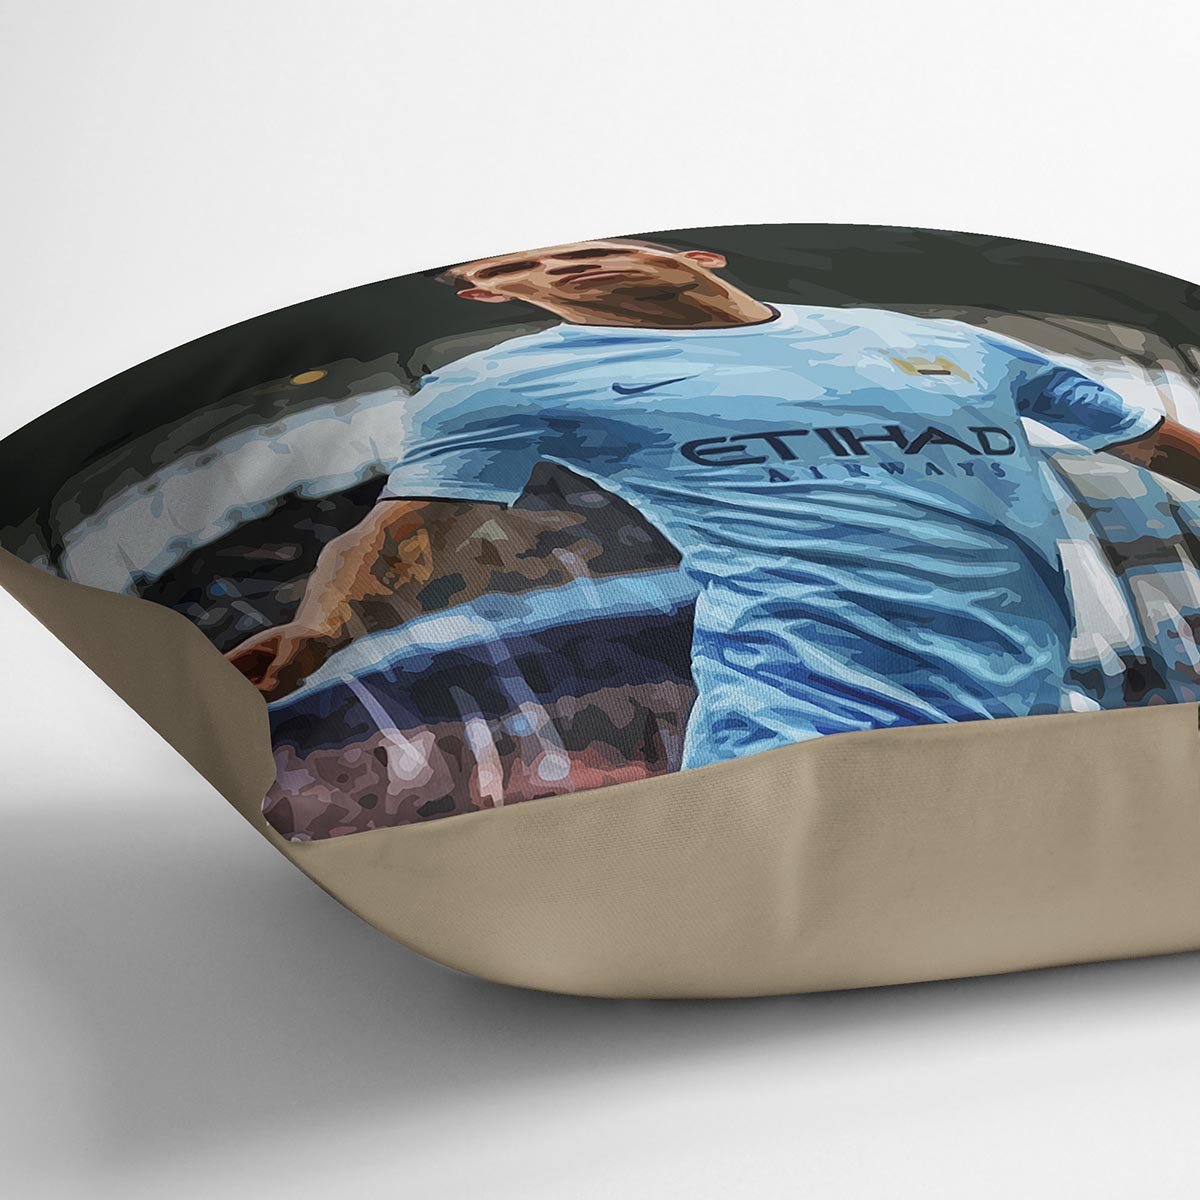 Sergio Aguero Manchester City Cushion